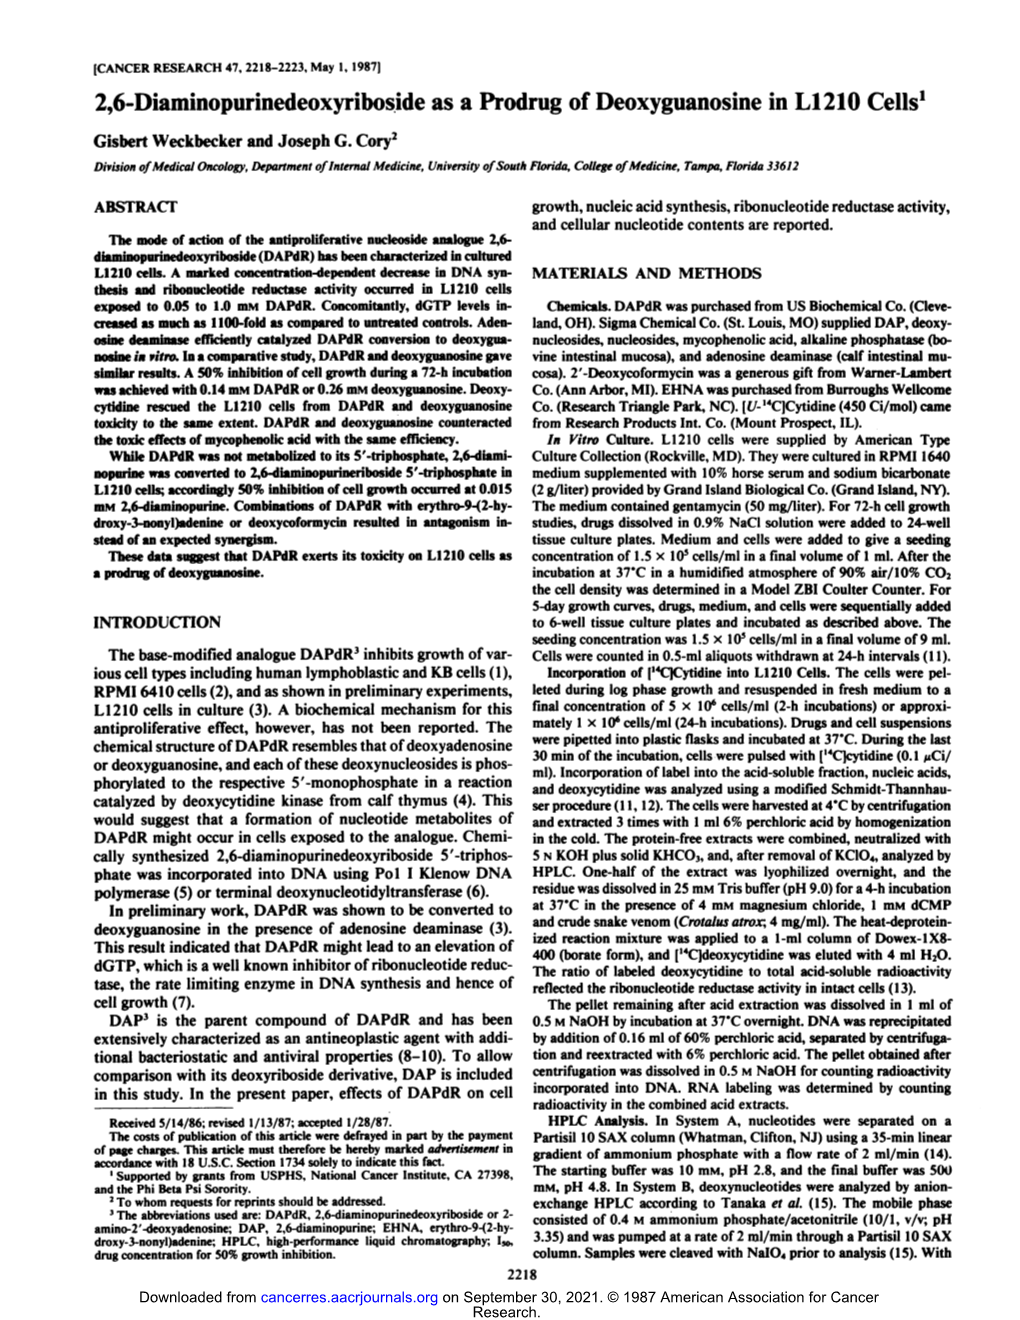 2,6-Diaminopurinedeoxyriboside As a Prodrug of Deoxyguanosine in LI 210 Cells1